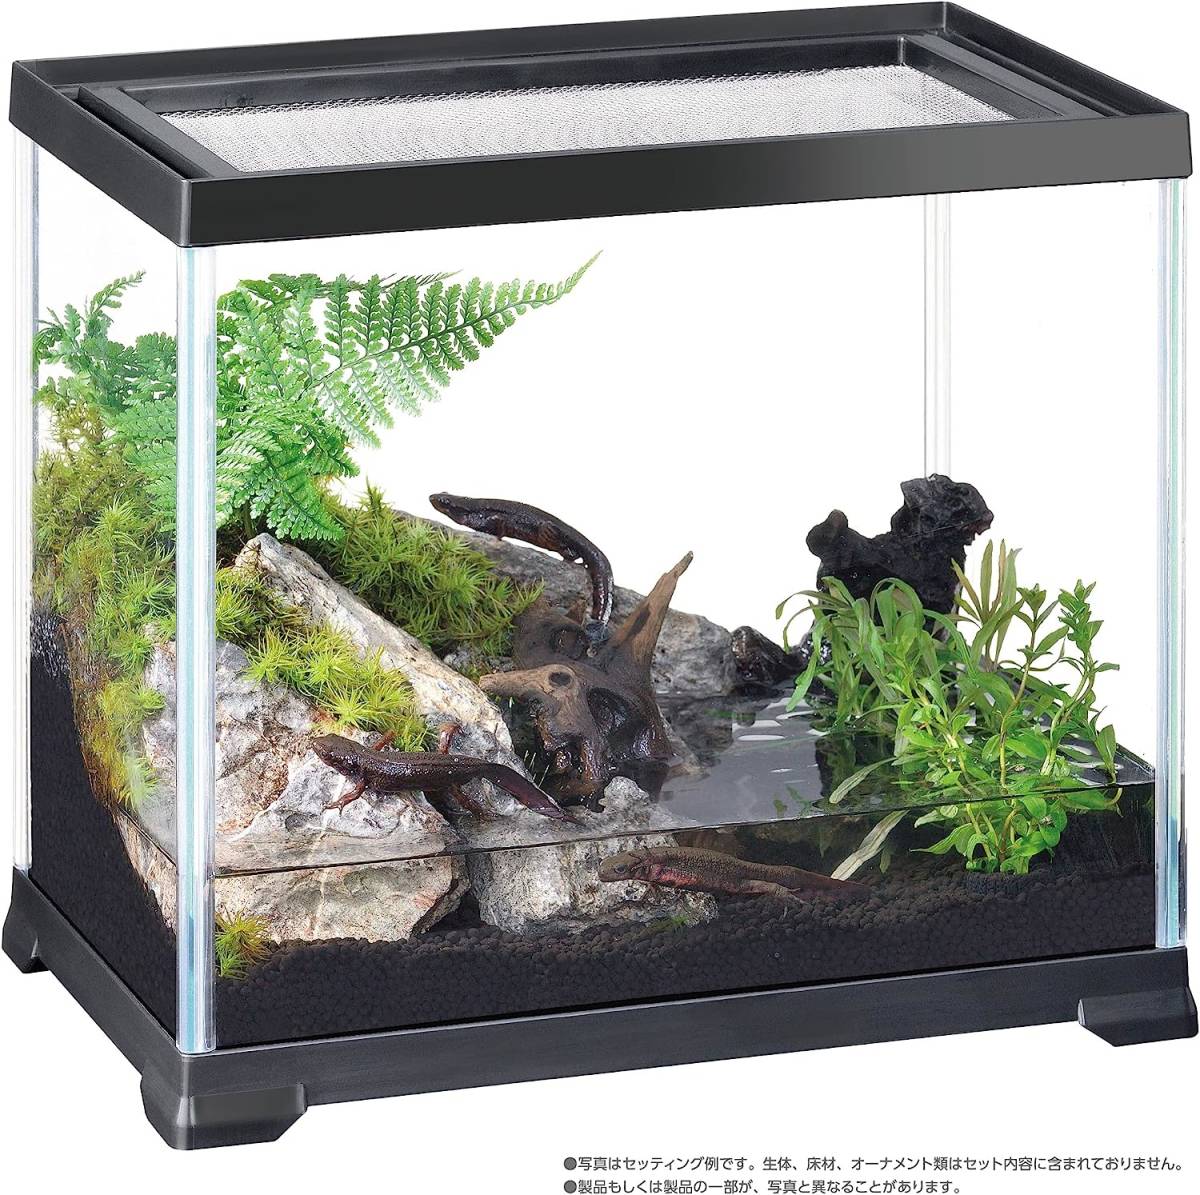 GEXjek attrition p terrier black 300 high (high) black frame reptiles * amphibia breeding cage 